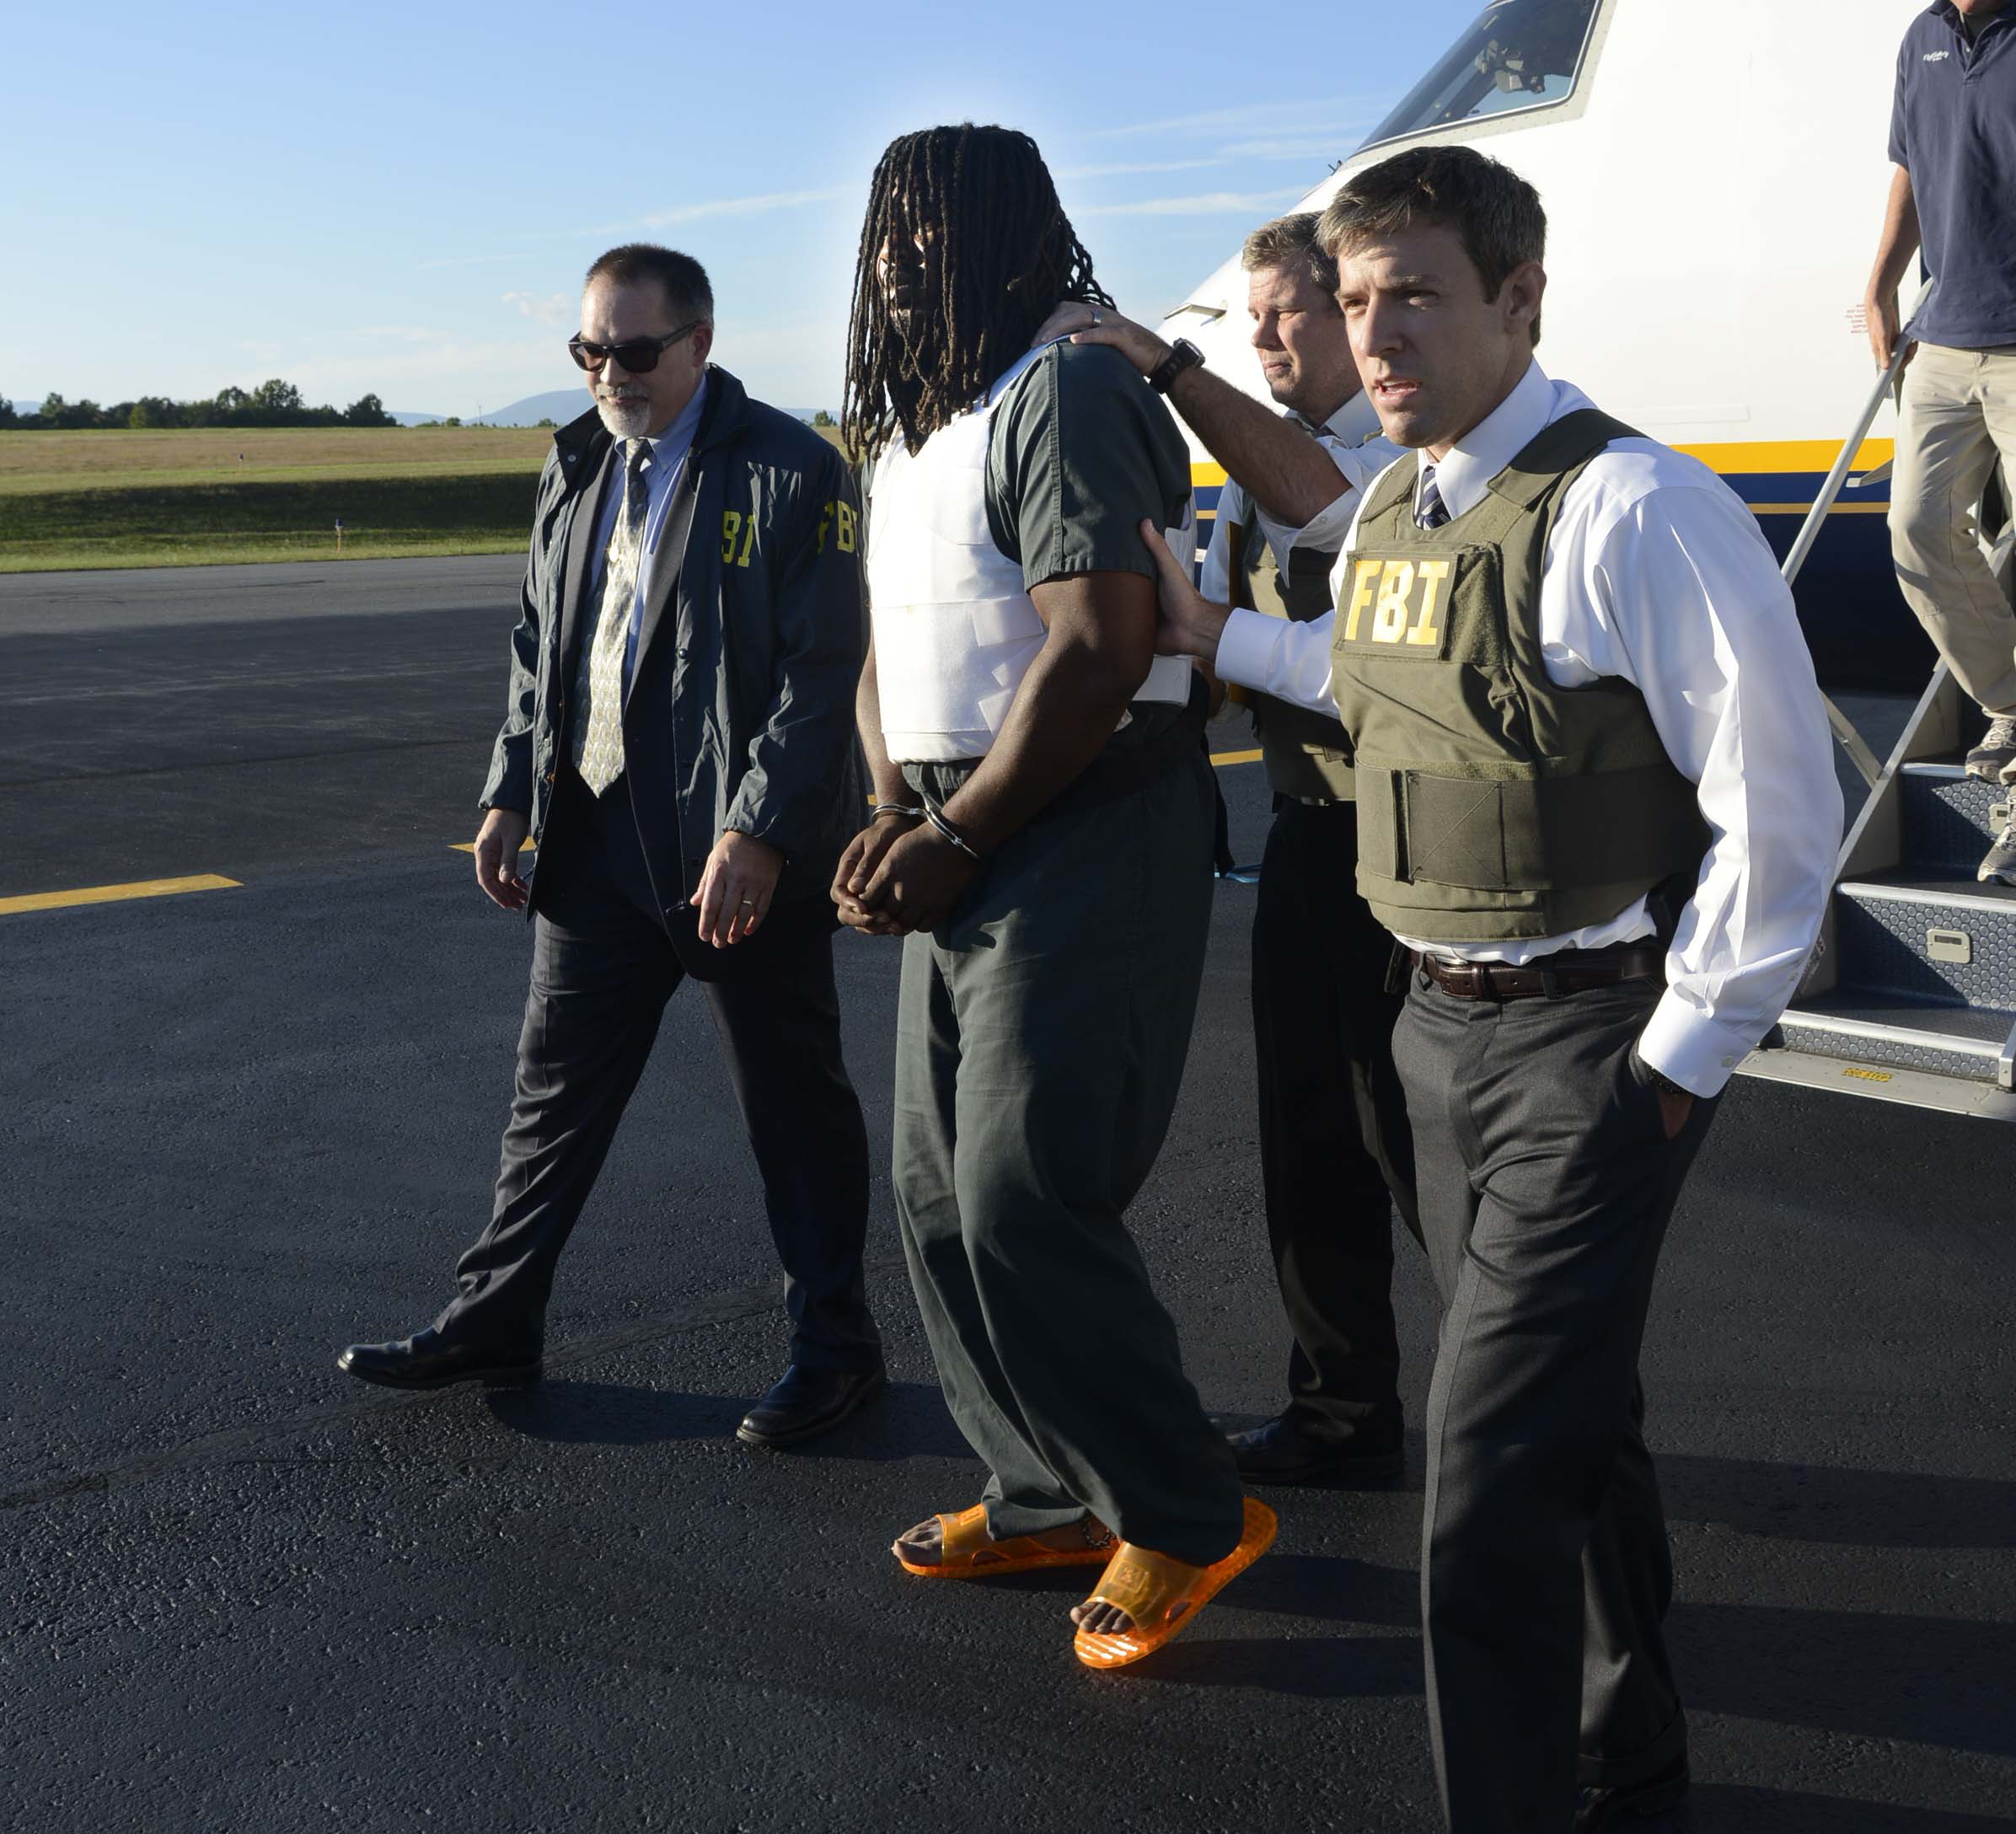 From left: FBI agents escort Jesse Matthew into the custody of the Charlottesville Police Department September 26, 2014 in Charlottesville, Virginia.